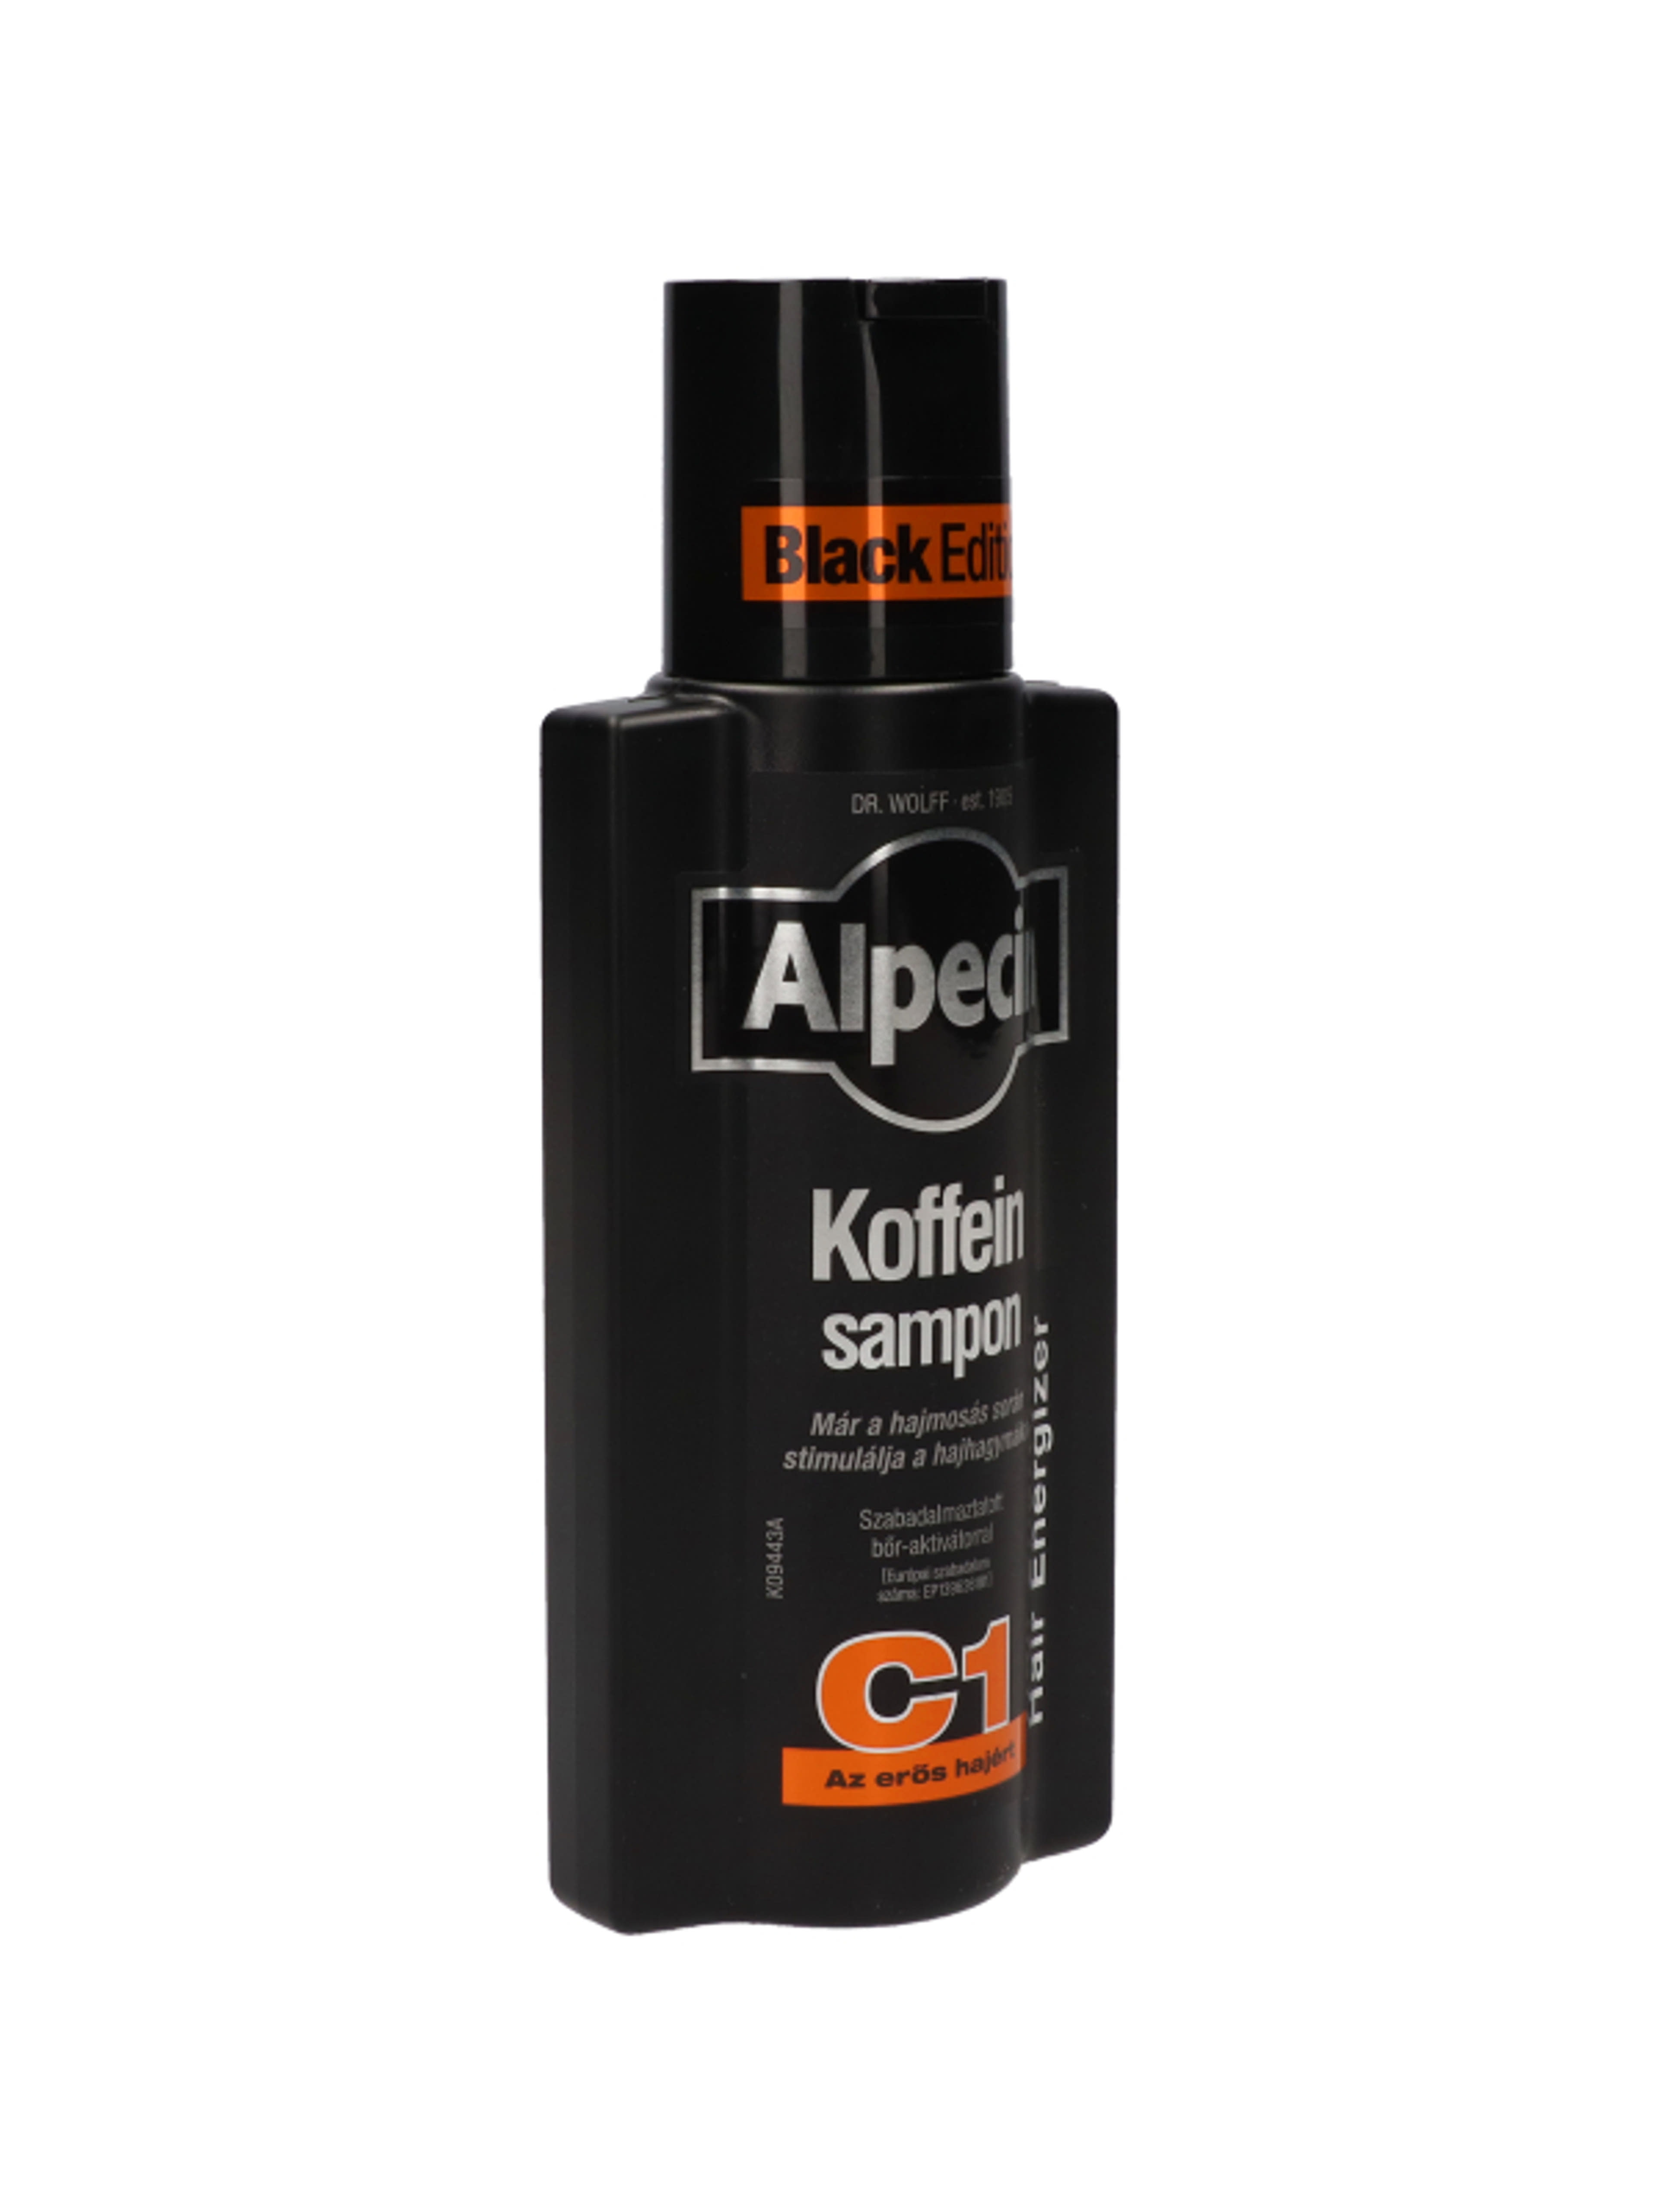 Alpecin C1 koffein sampon black edition - 250 ml-4